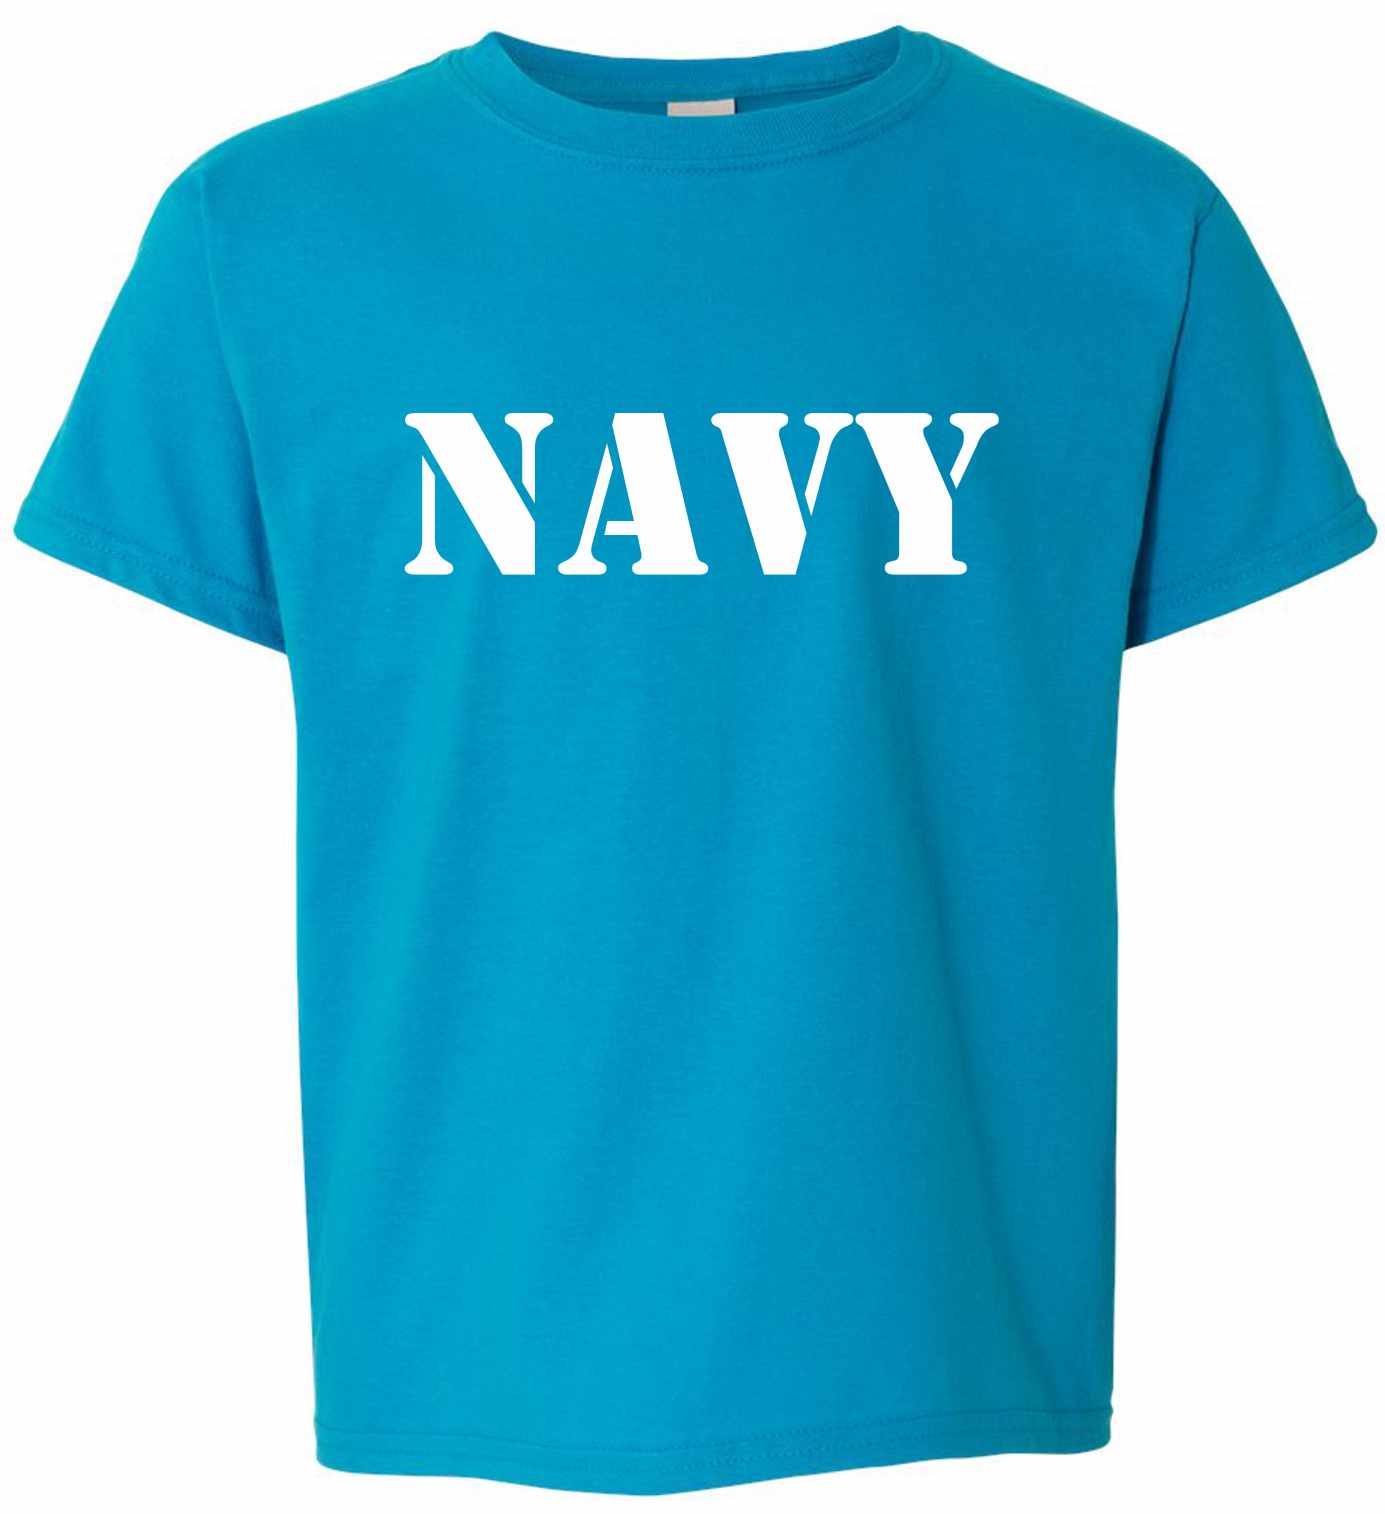 NAVY on Kids T-Shirt (#346-201)